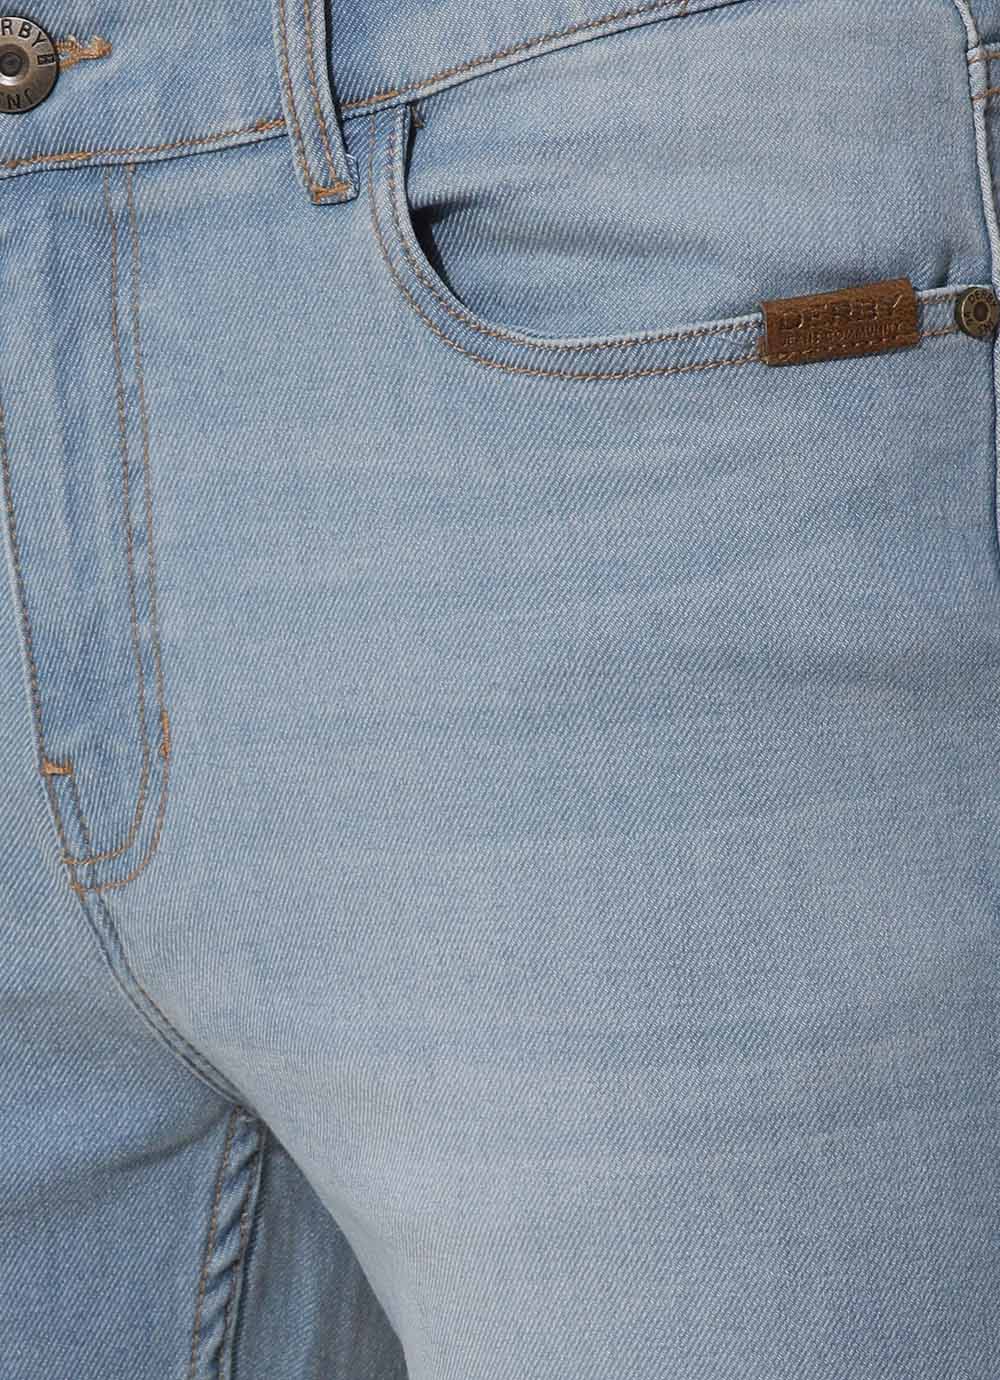 Light blue Jeans with U pocket made of Twill Denim